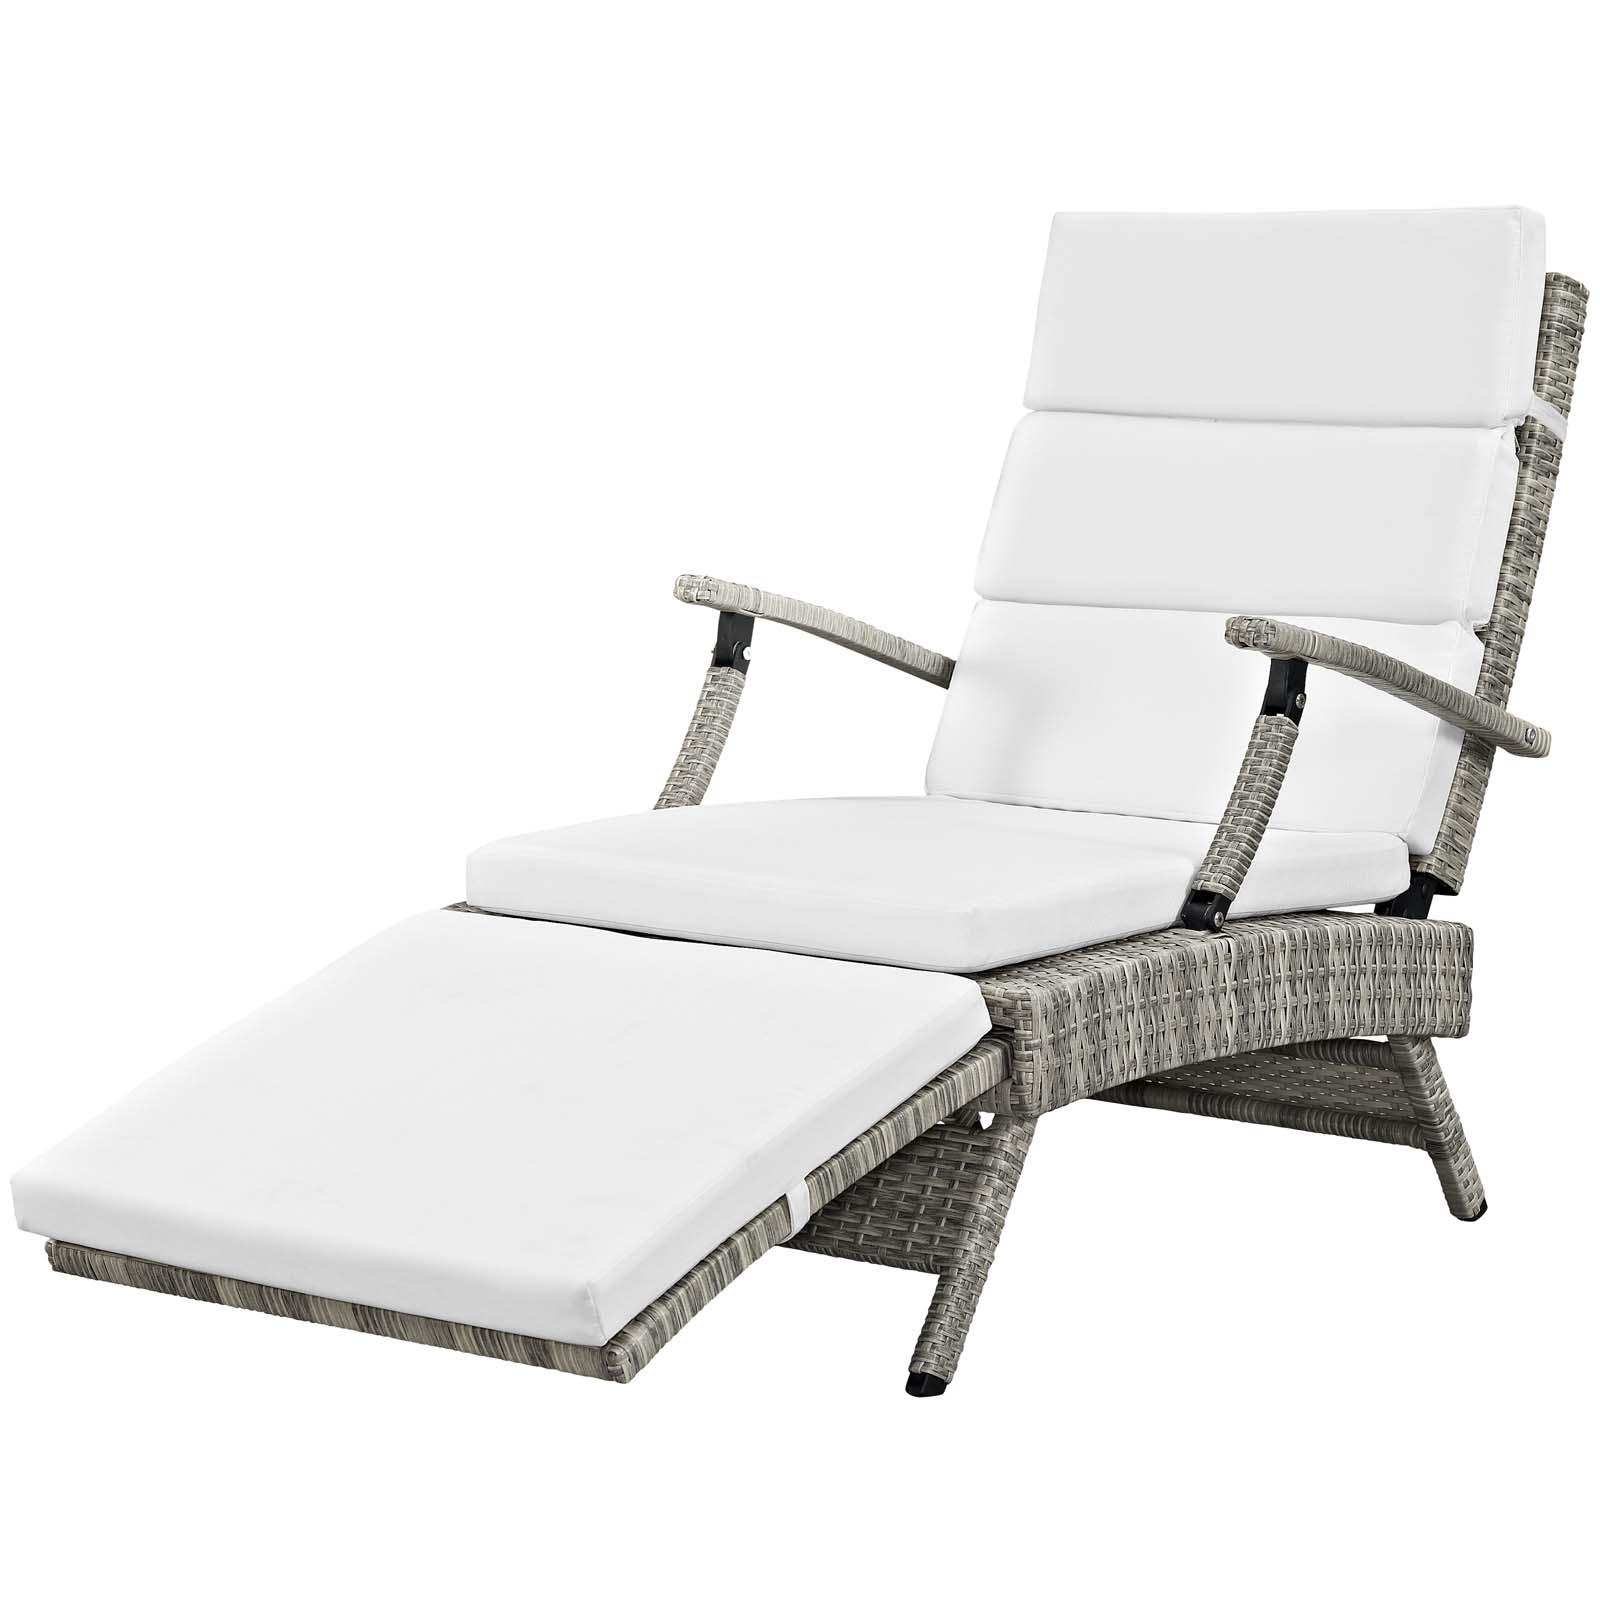 Contemporary Modern Urban Designer Outdoor Patio Balcony Garden Furniture Lounge Chair Chaise, Fabric Rattan Wicker, White - image 3 of 9